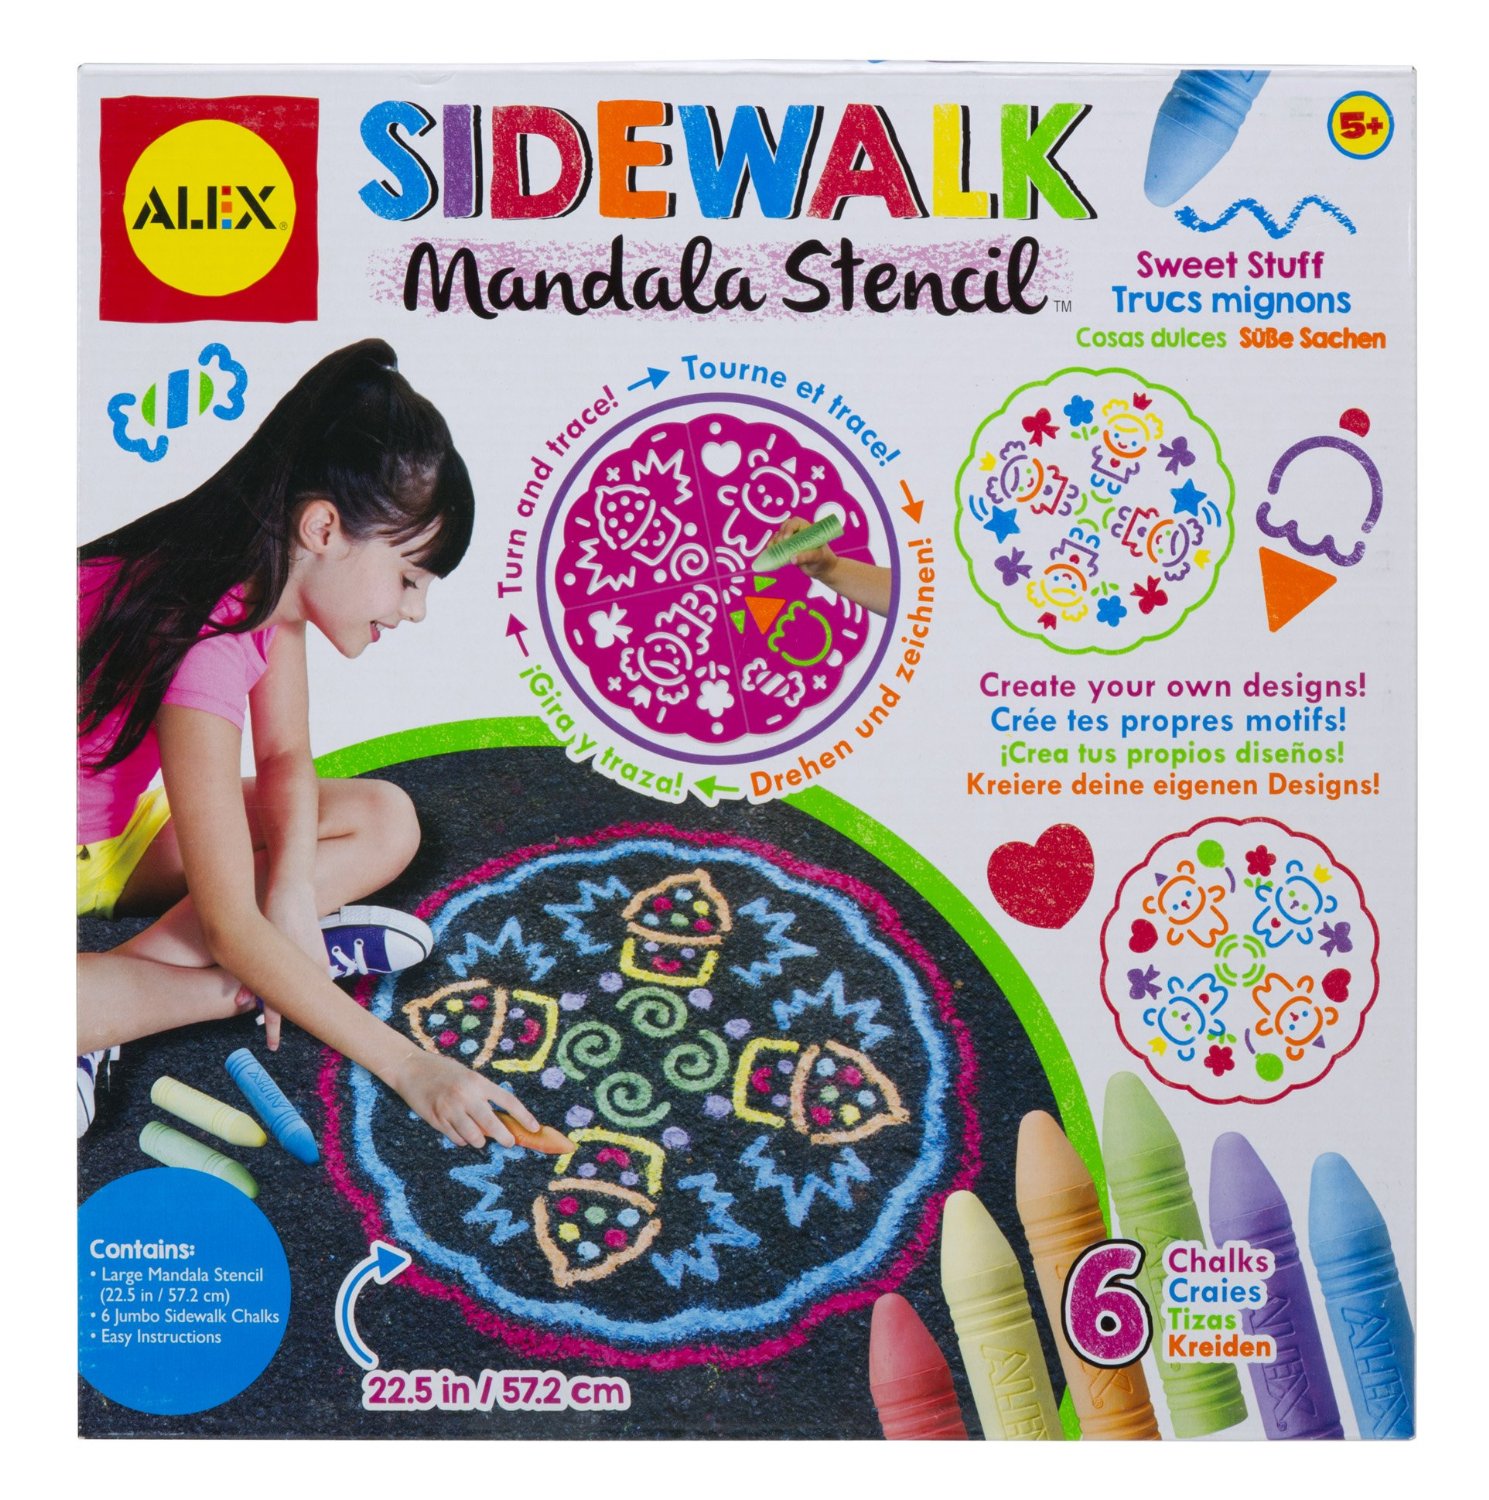 ALEX Toys Artist Studio Sidewalk Mandala with Sweet Stuff Designs